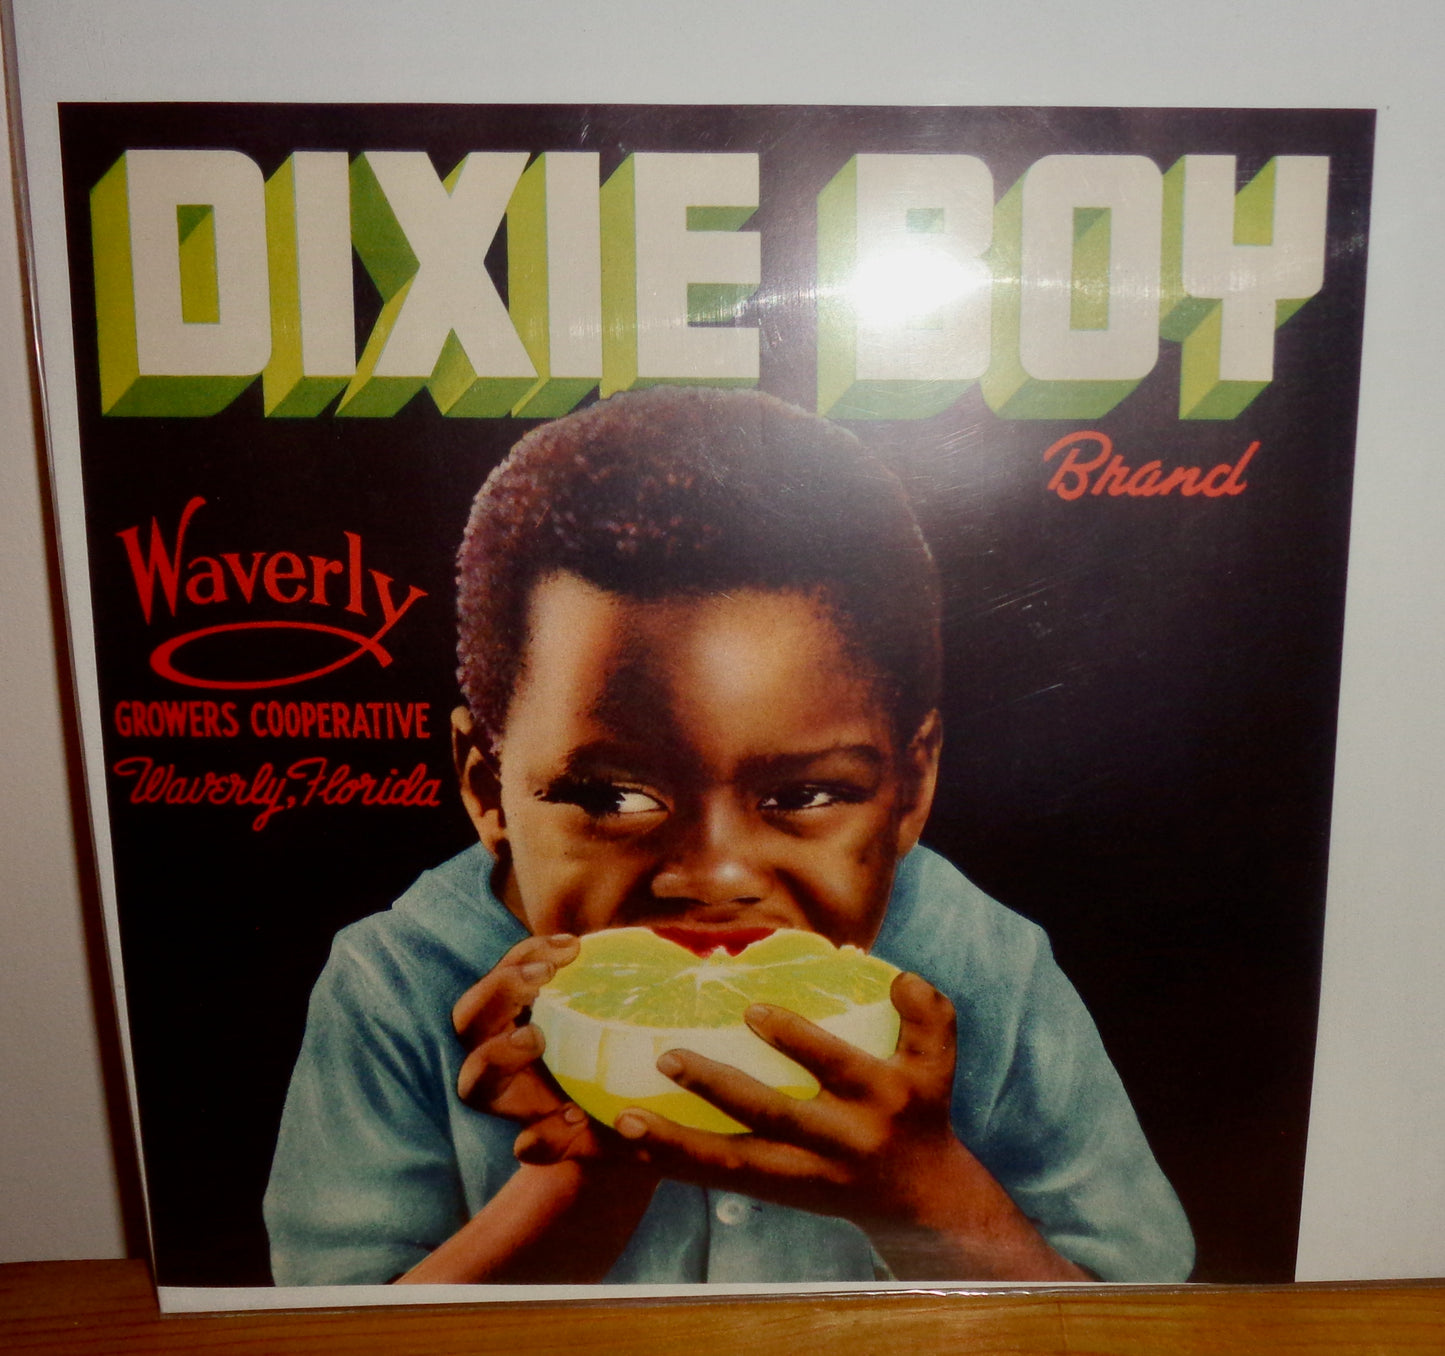 Vintage Original Fruit Crate Label For Dixie Boy Waverly Brand